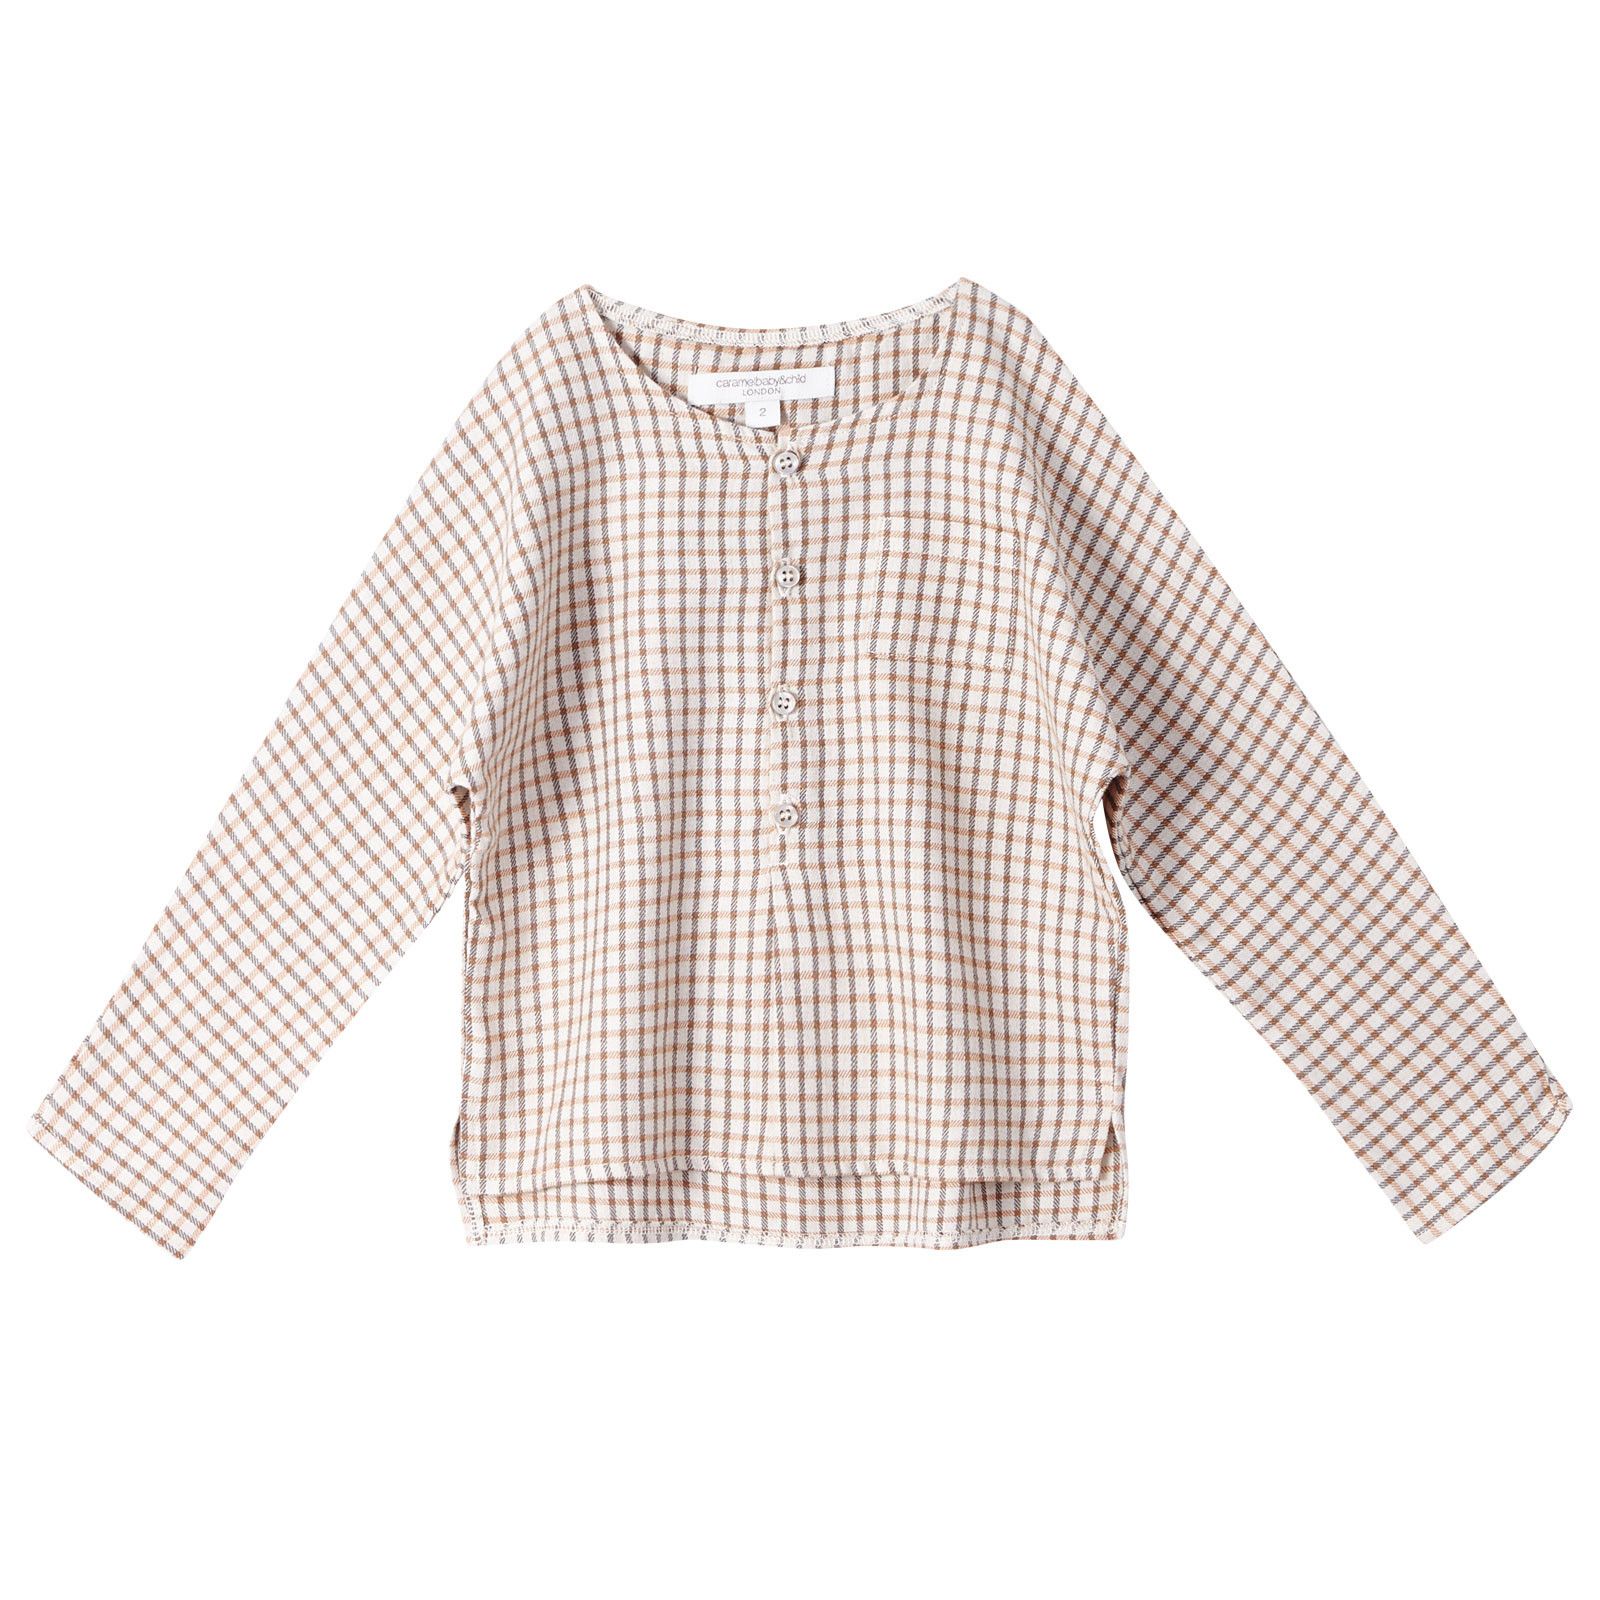 Boys Beige Spic Check Cotton Shirt - CÉMAROSE | Children's Fashion Store - 1